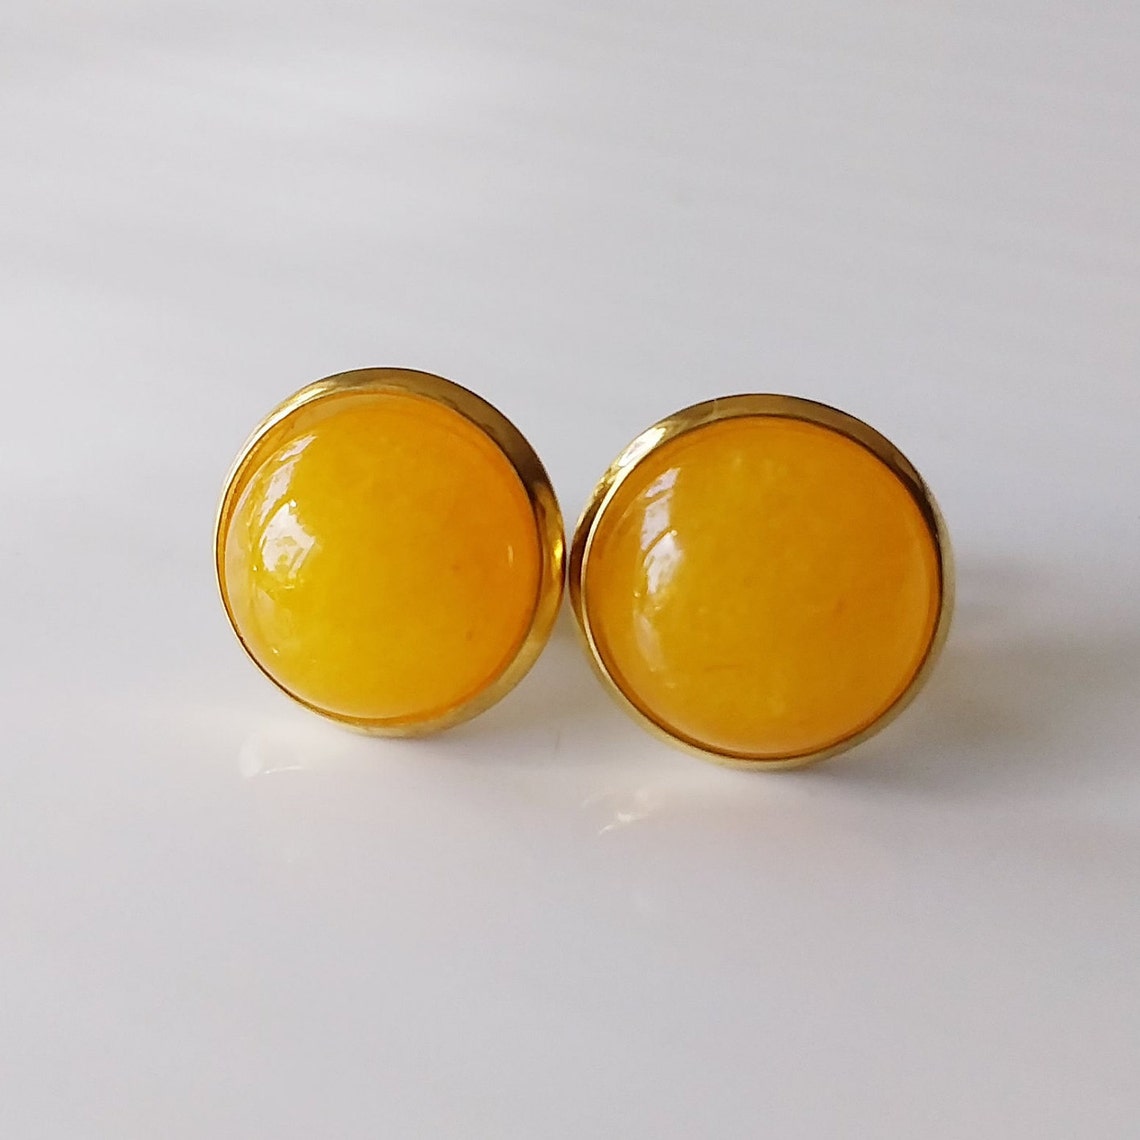 Jade stud earrings yellow cabochon earrings stainless | Etsy